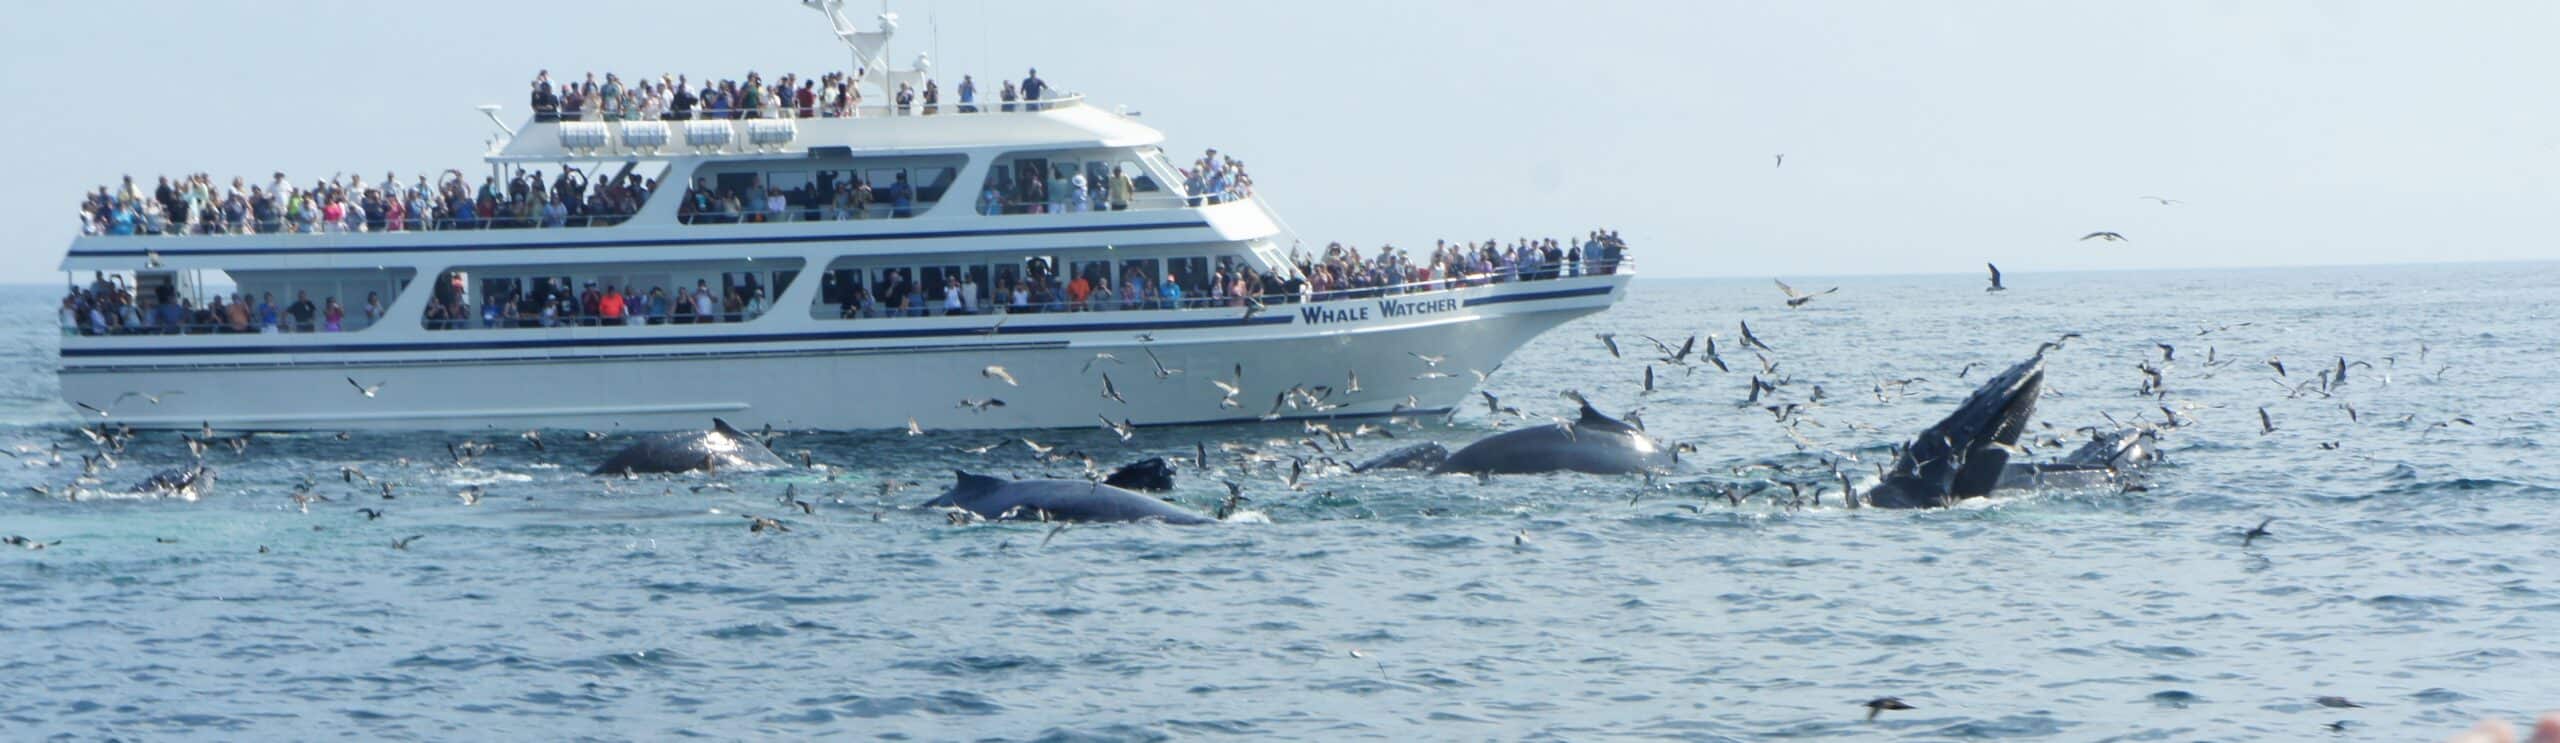 Whale feeding frenzy